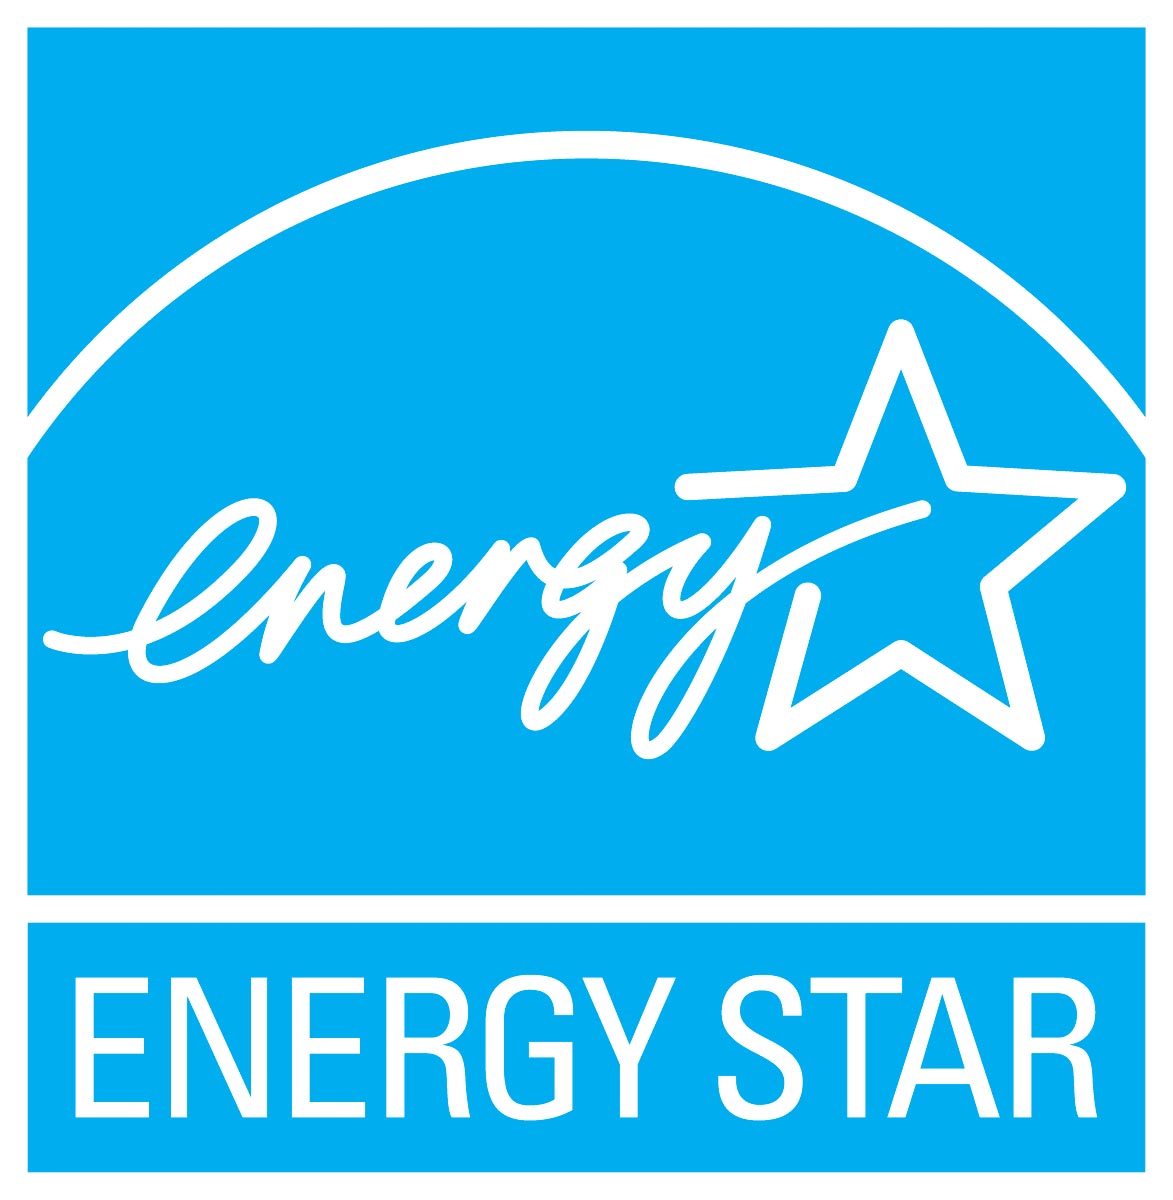 ENERGY STAR Haute Efficacité